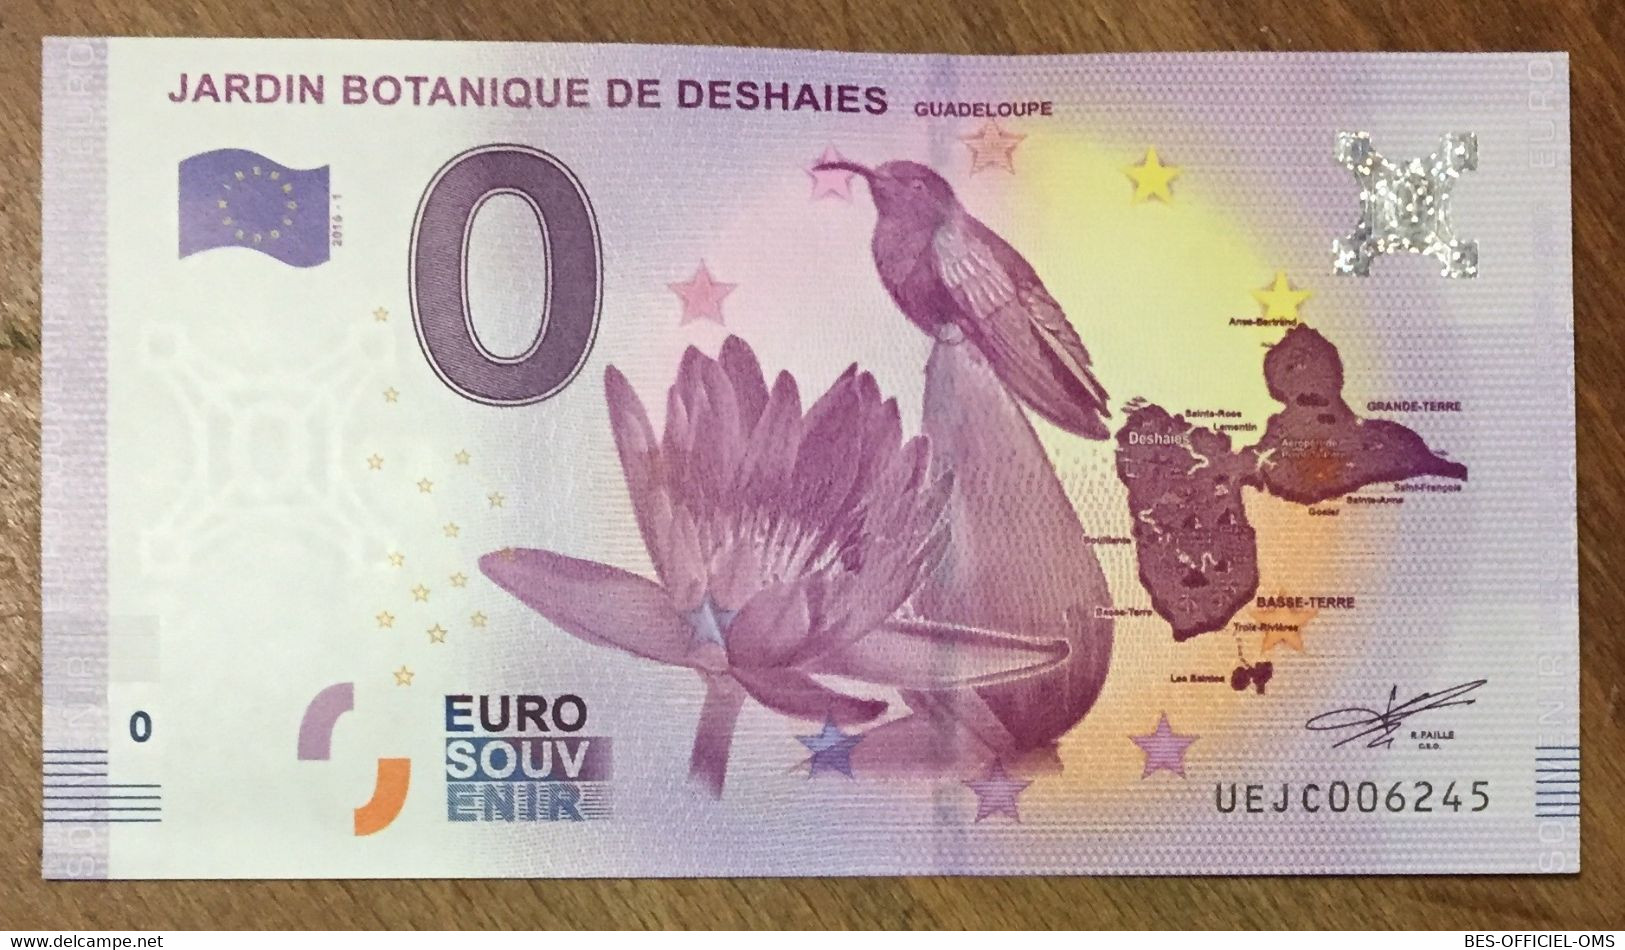 2016 BILLET 0 EURO SOUVENIR DPT 97 JARDIN BOTANIQUE DE DESHAIES GUADELOUPE ZERO 0 EURO SCHEIN BANKNOTE PAPER MONEY - Privatentwürfe